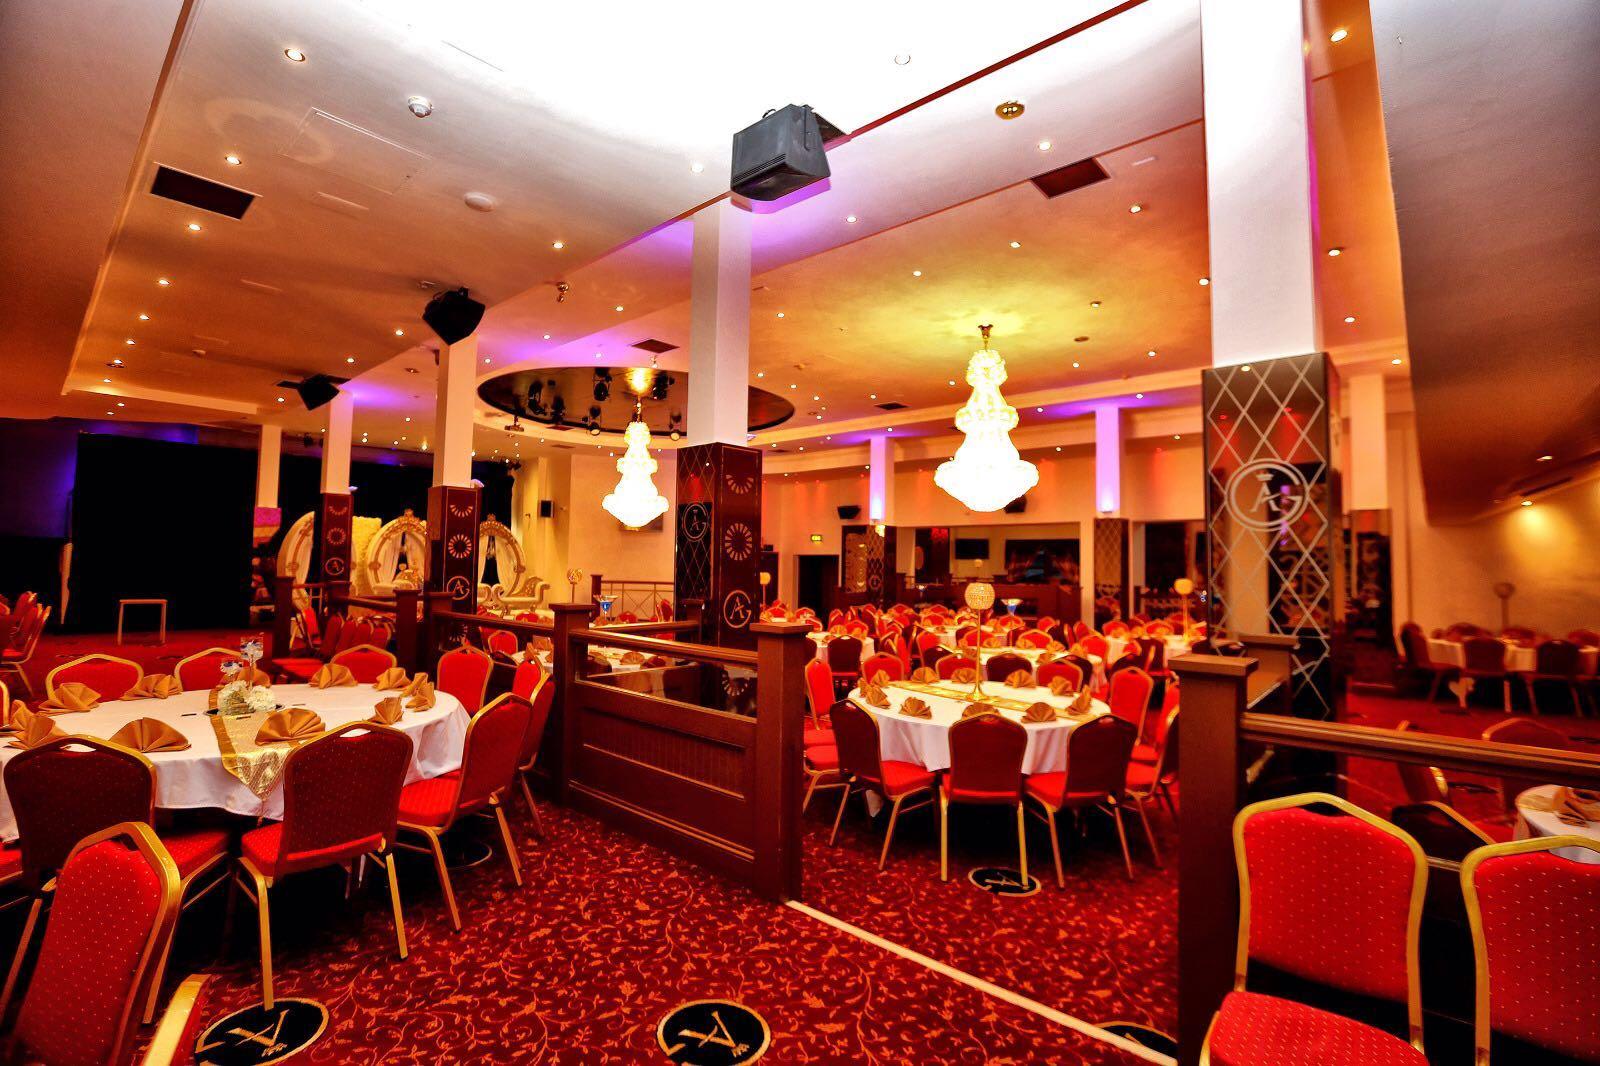 The Grand Astoria Venue Middlesbrough 07710 143104